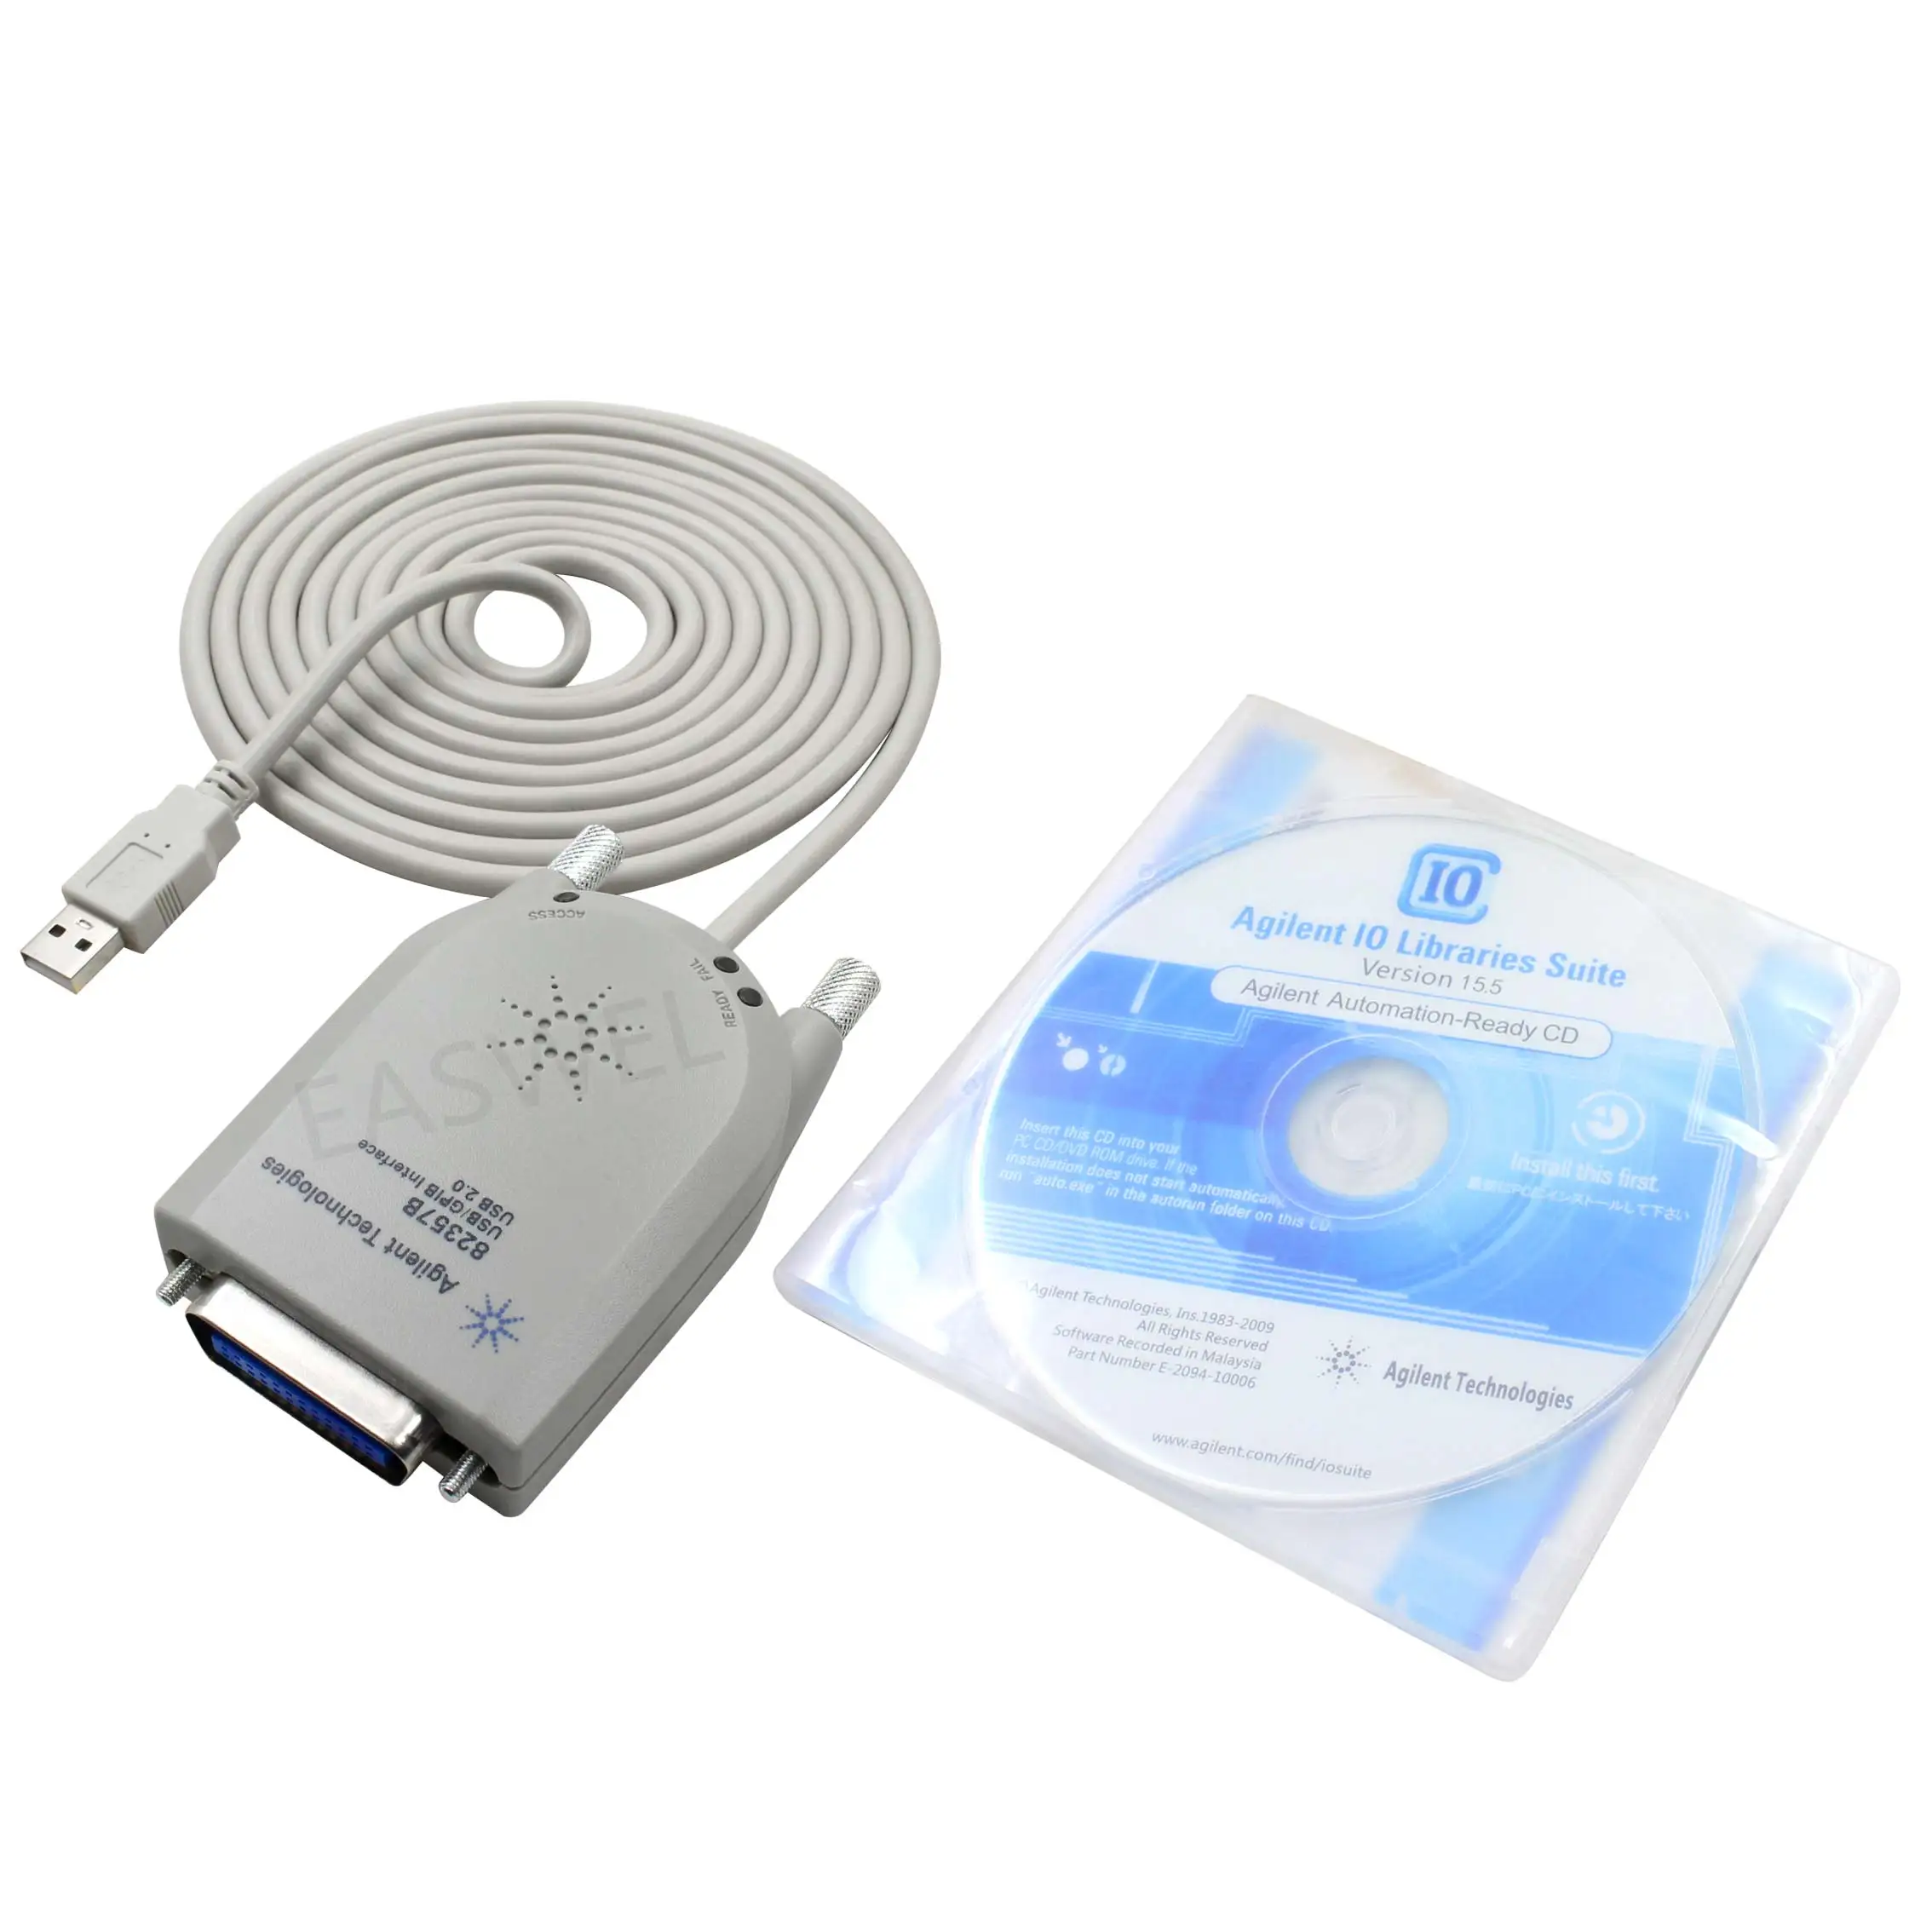 NEW Agilent 82357B USB/GPIB Interface High-Speed USB 2.0 with CD Driver 